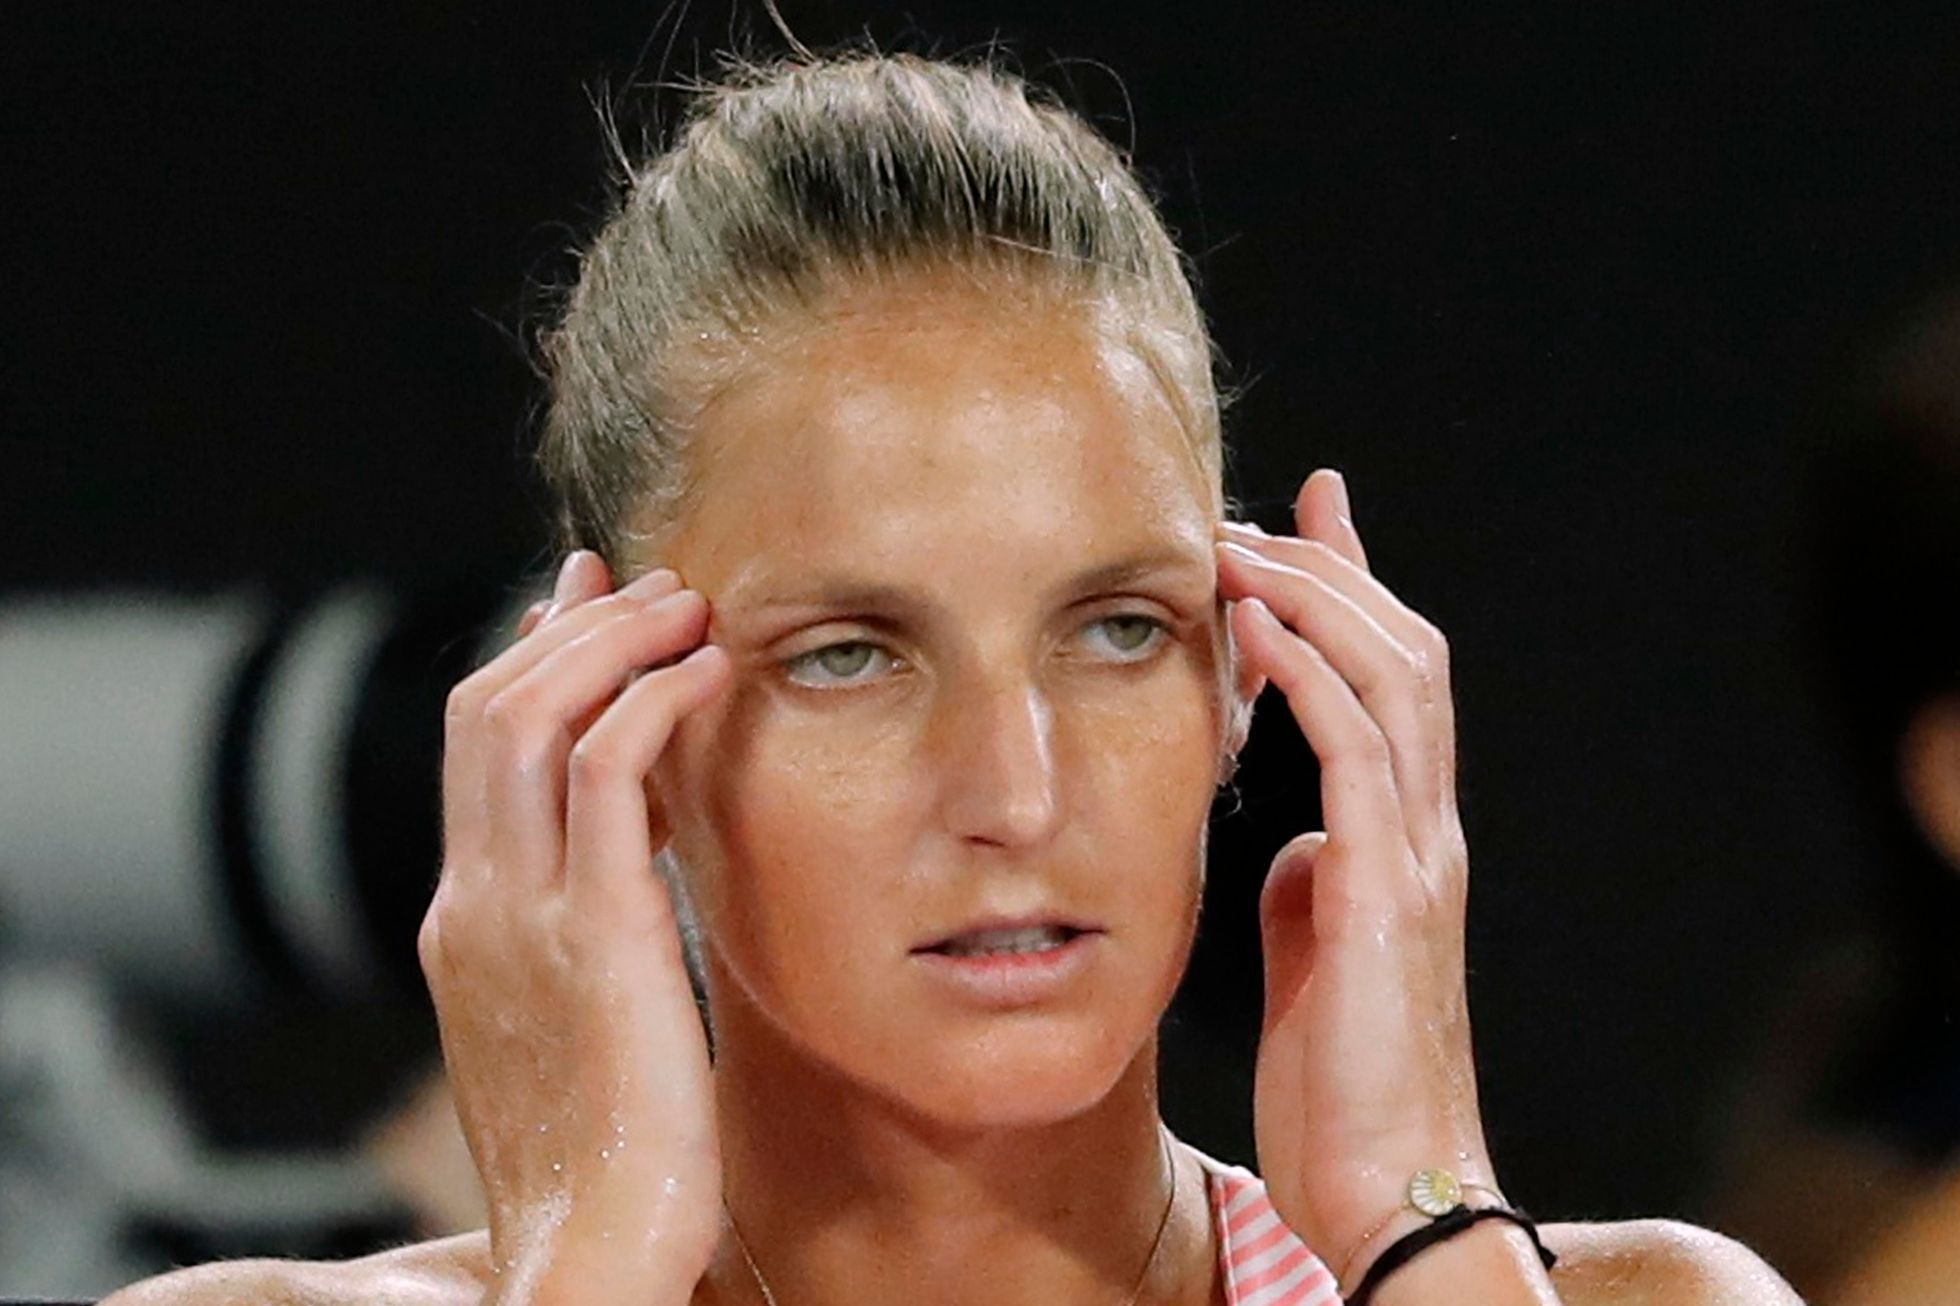 Karolína Plíšková v semifinále Australian Open 2019